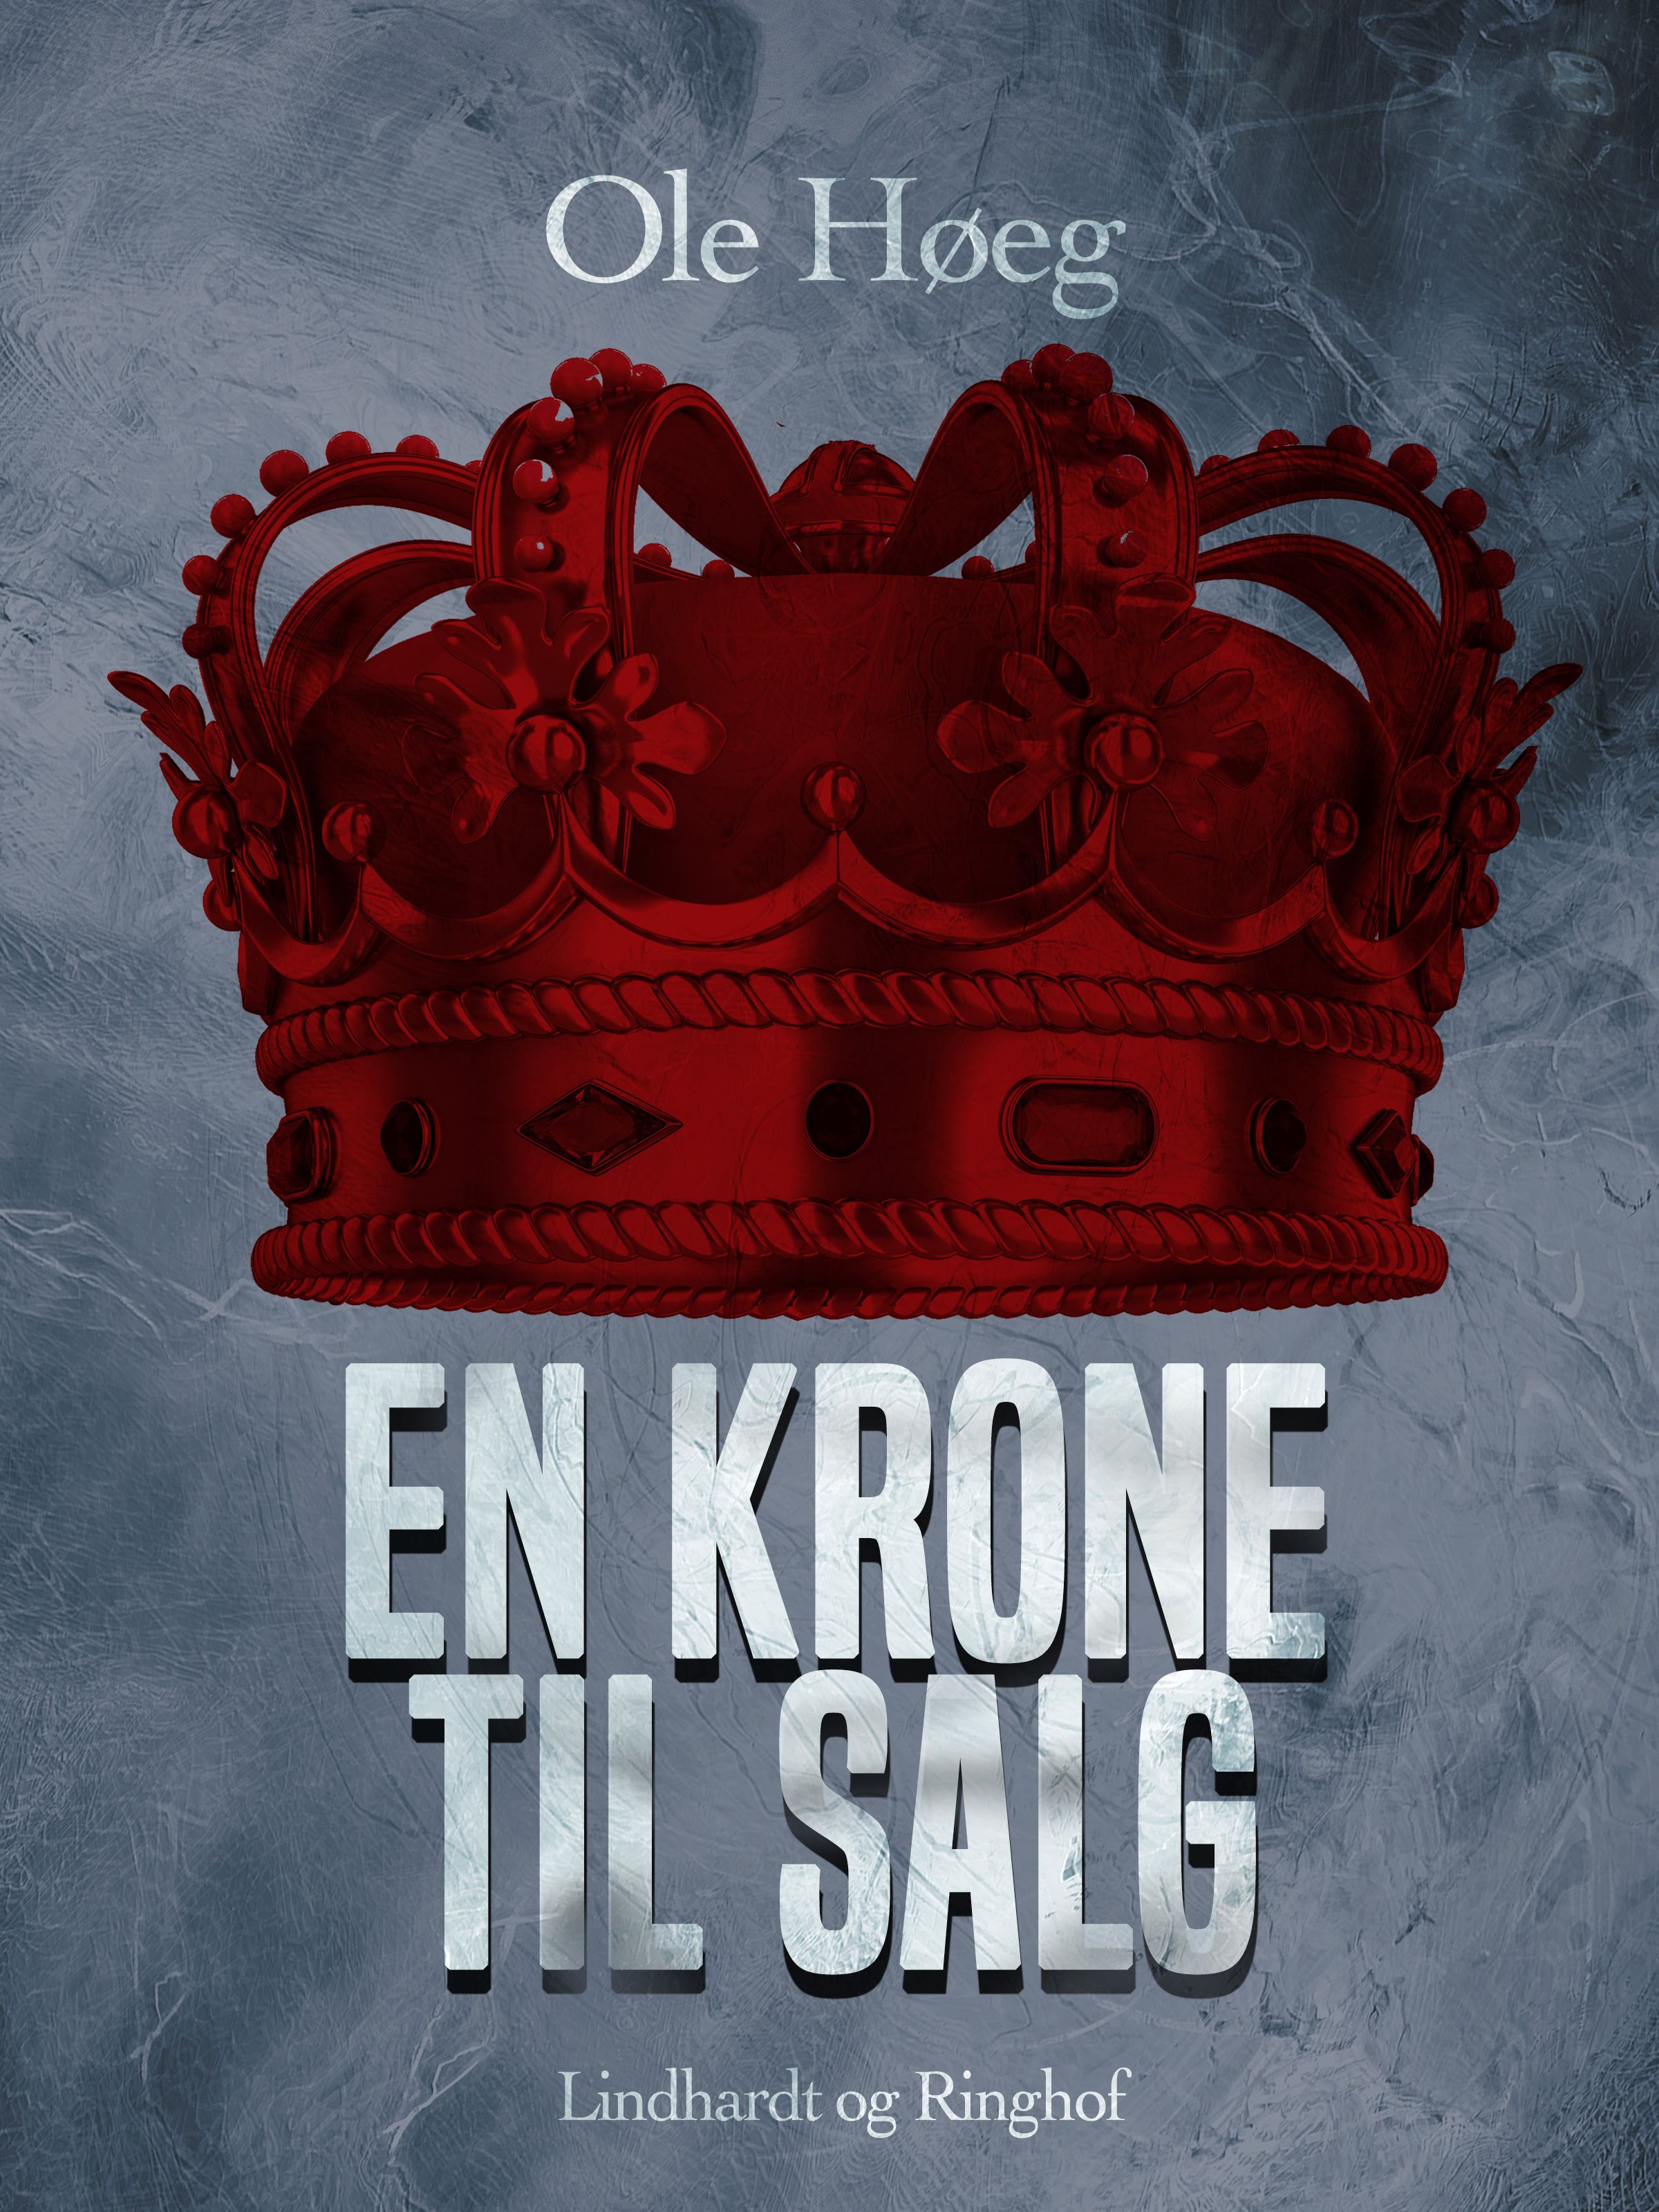 En krone til salg, audiobook by Ole Høeg